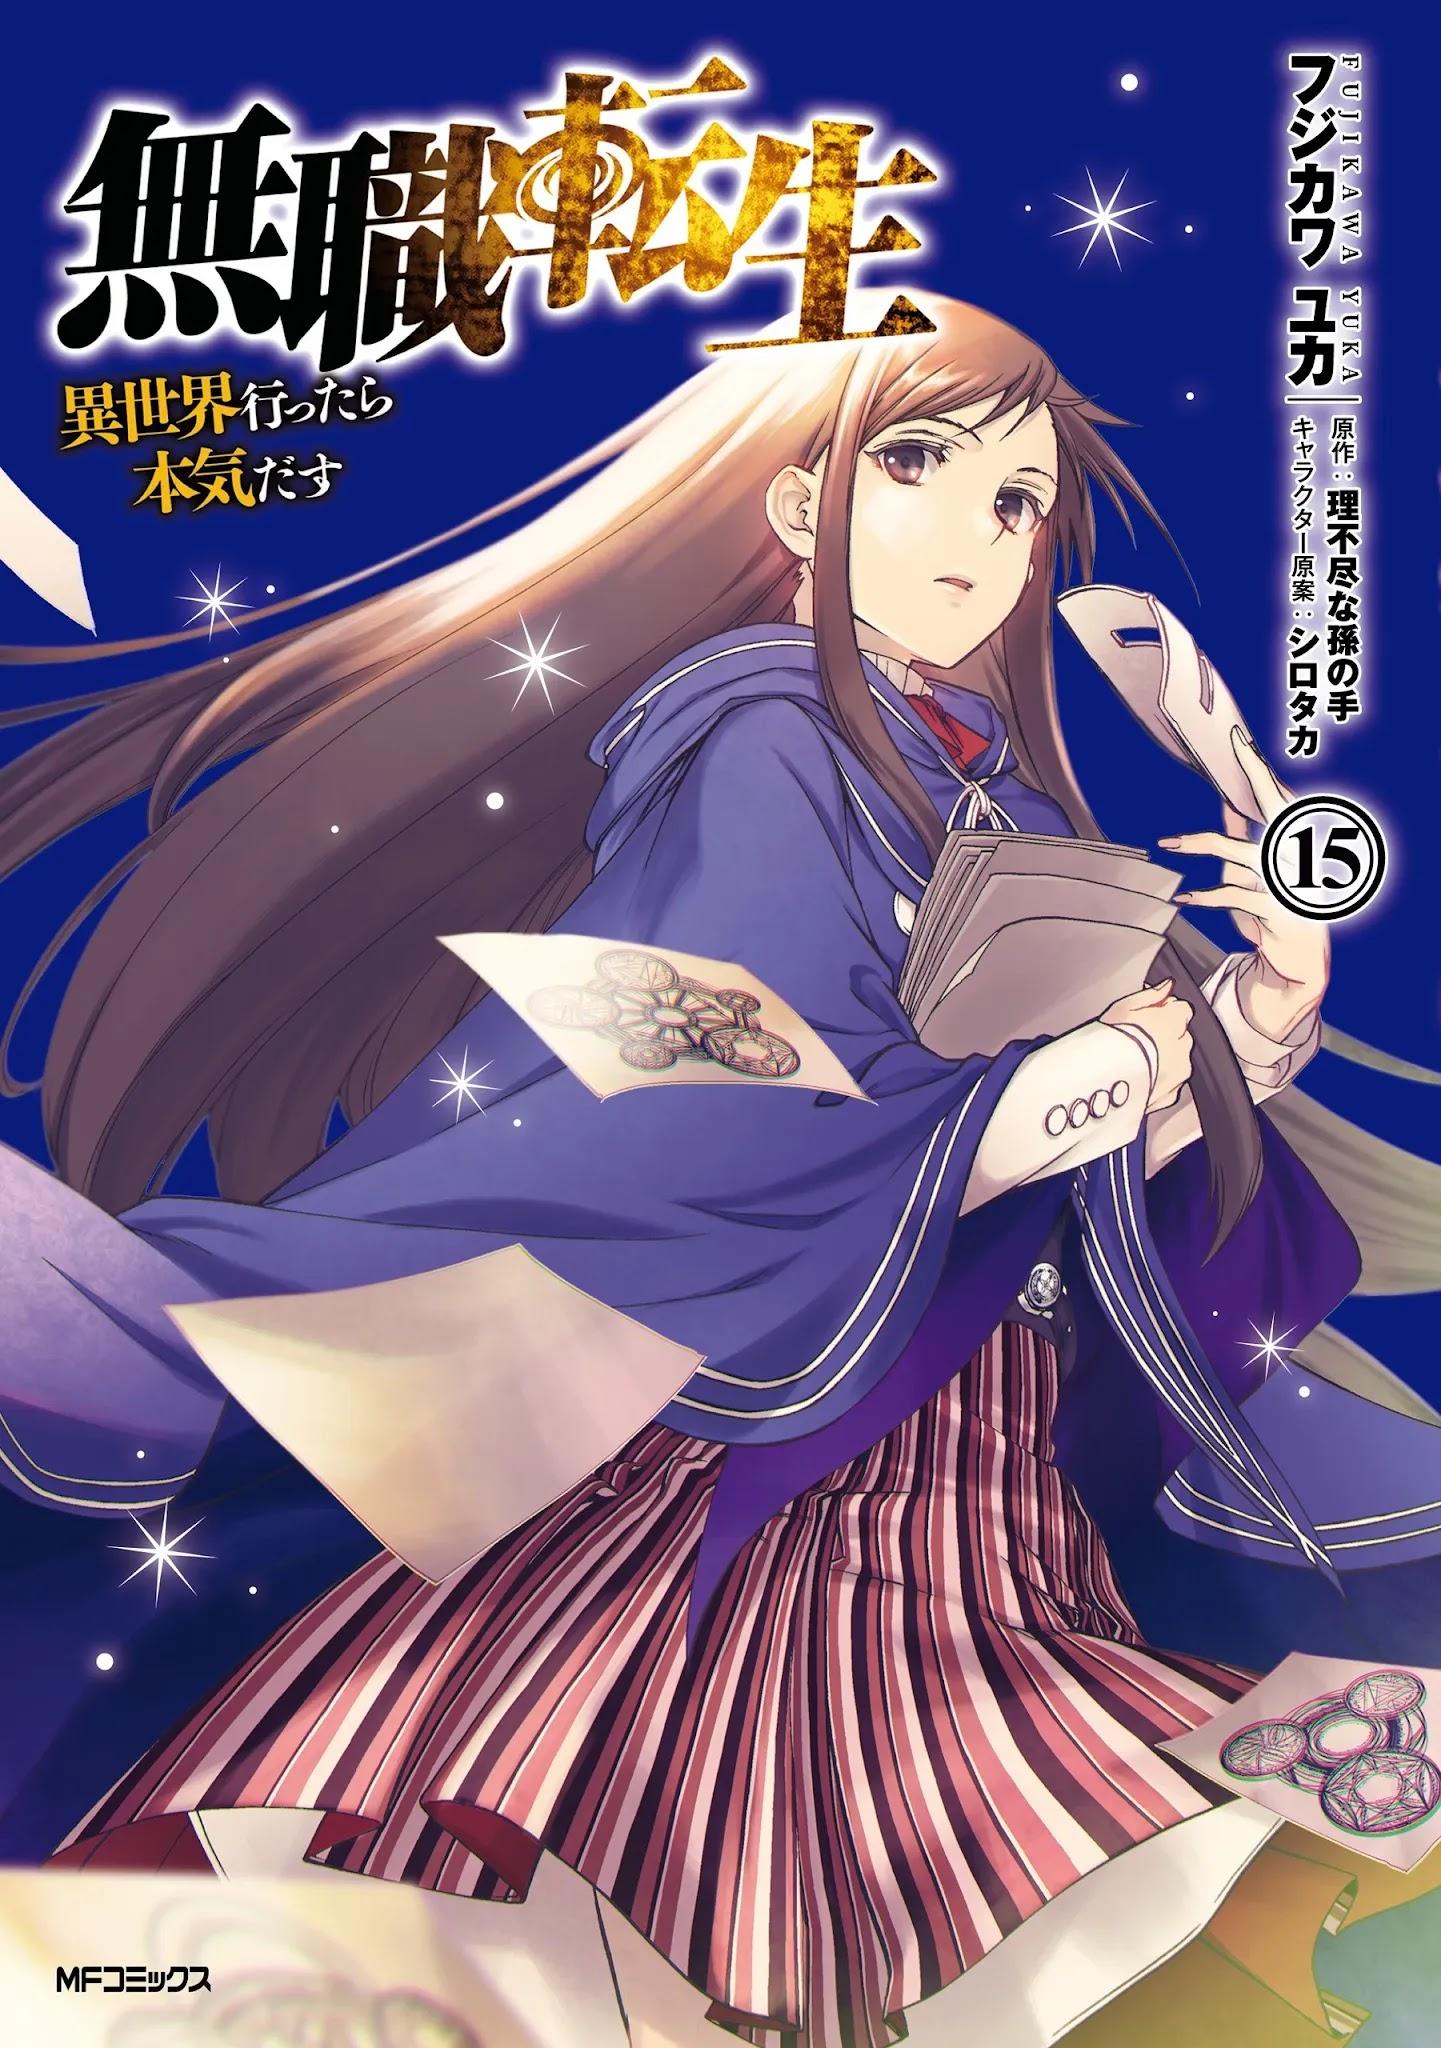 Mushoku Tensei - Isekai Ittara Honki Dasu Chapter 74 page 1 - Mangakakalot